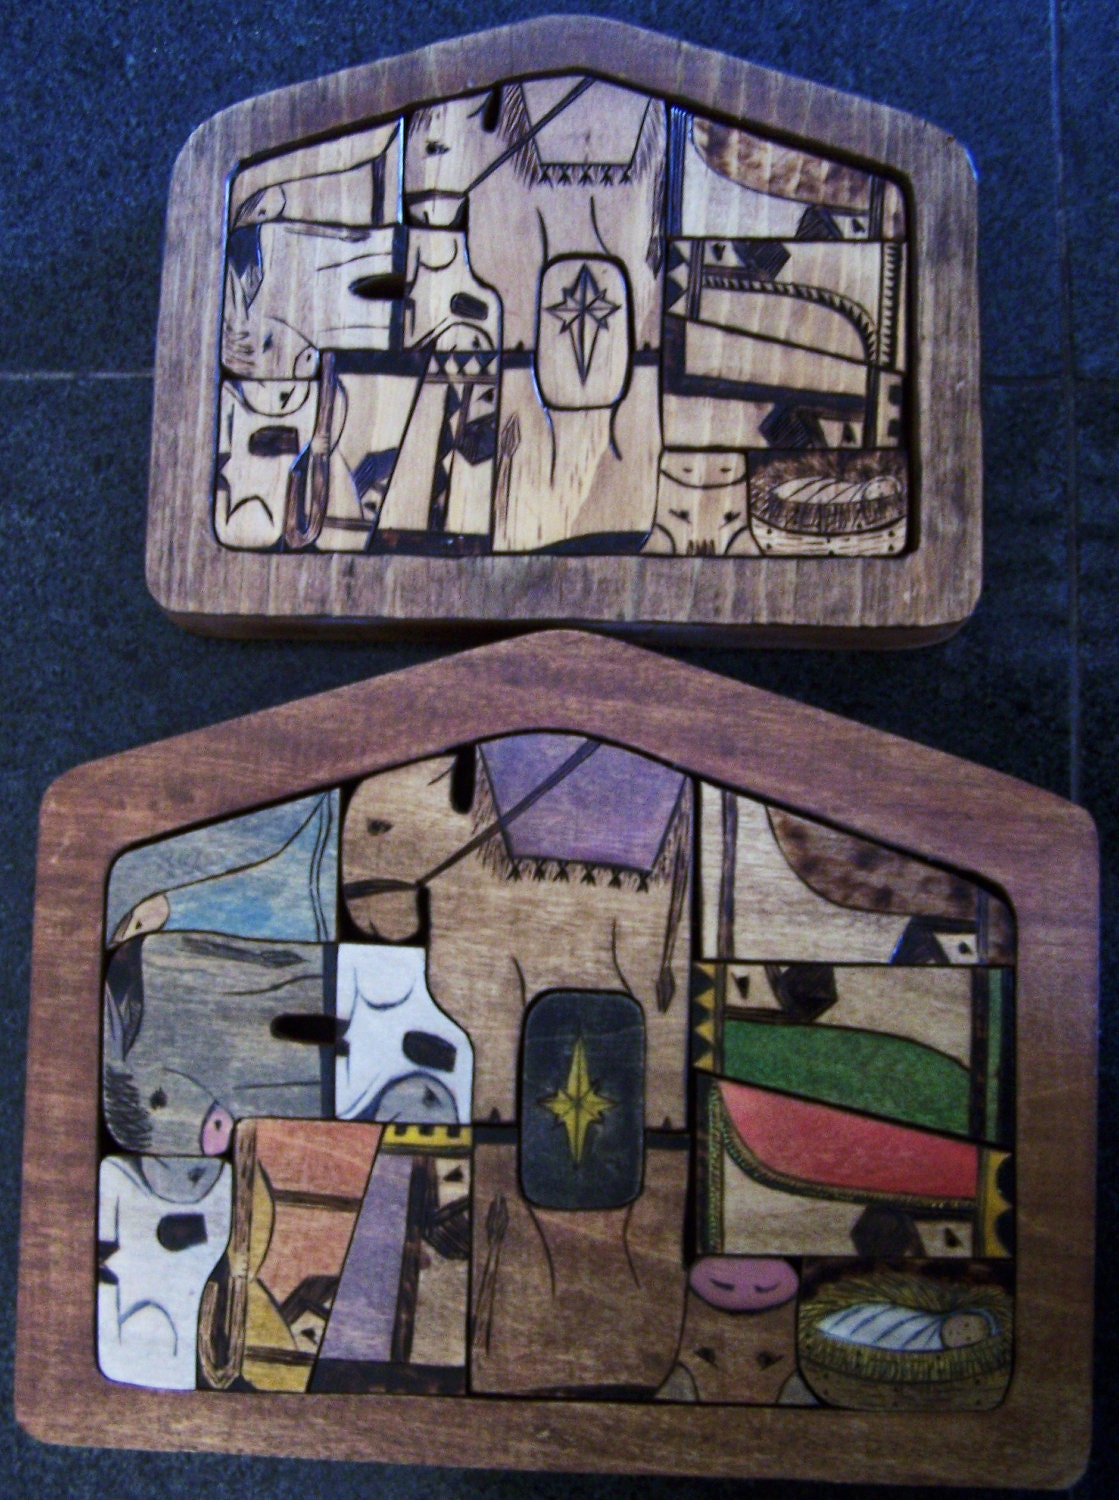 Miniture Nativity puzzle with wood burned design